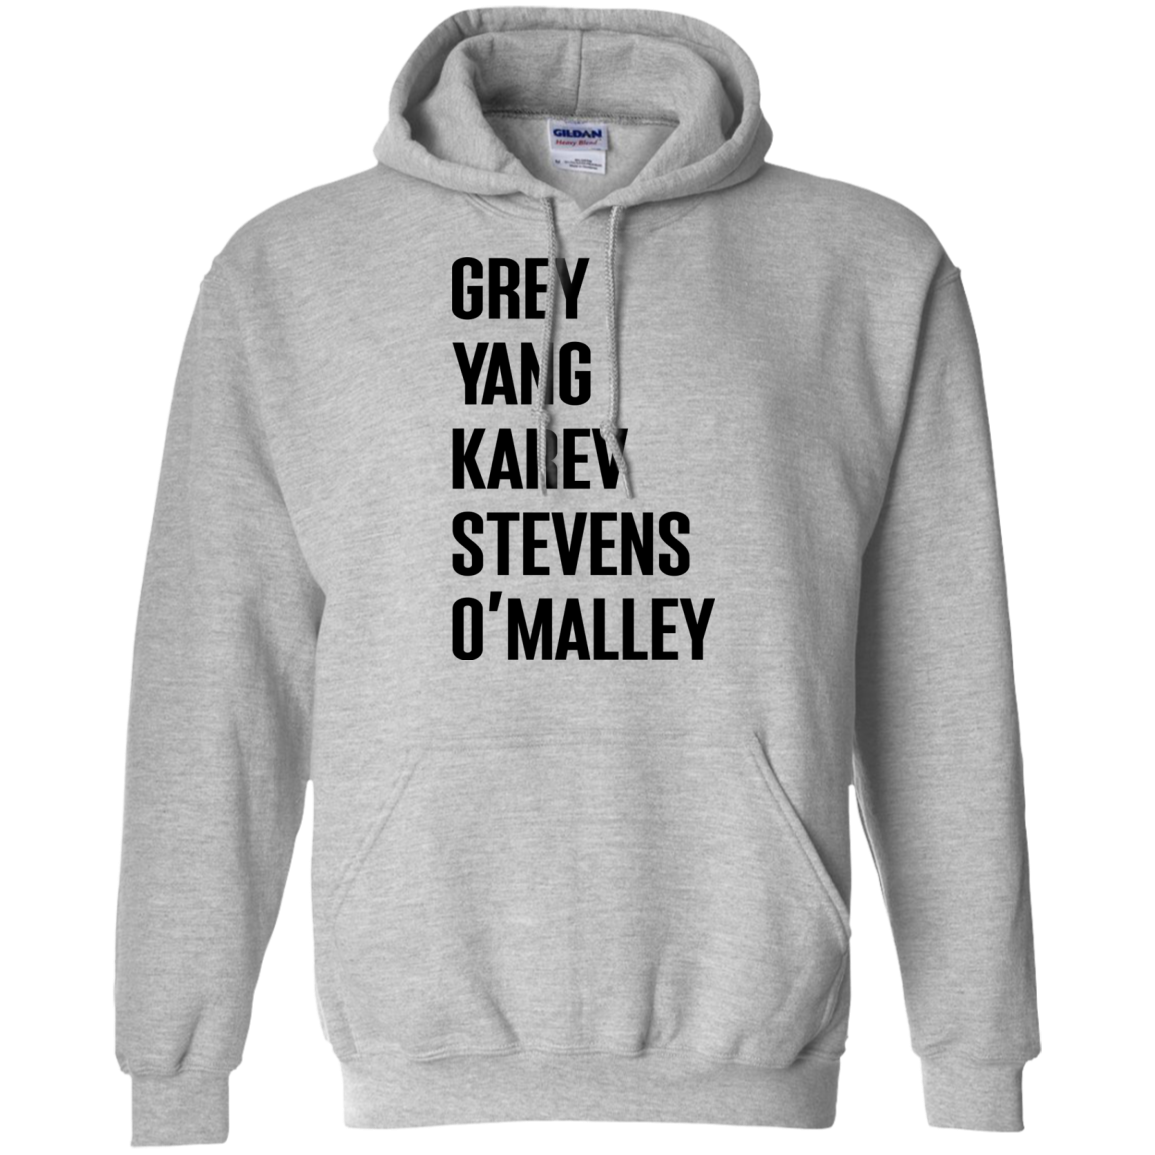 Greys Anatomy Sweater, Shirt: Grey Yang Karev Stevens O'Malley